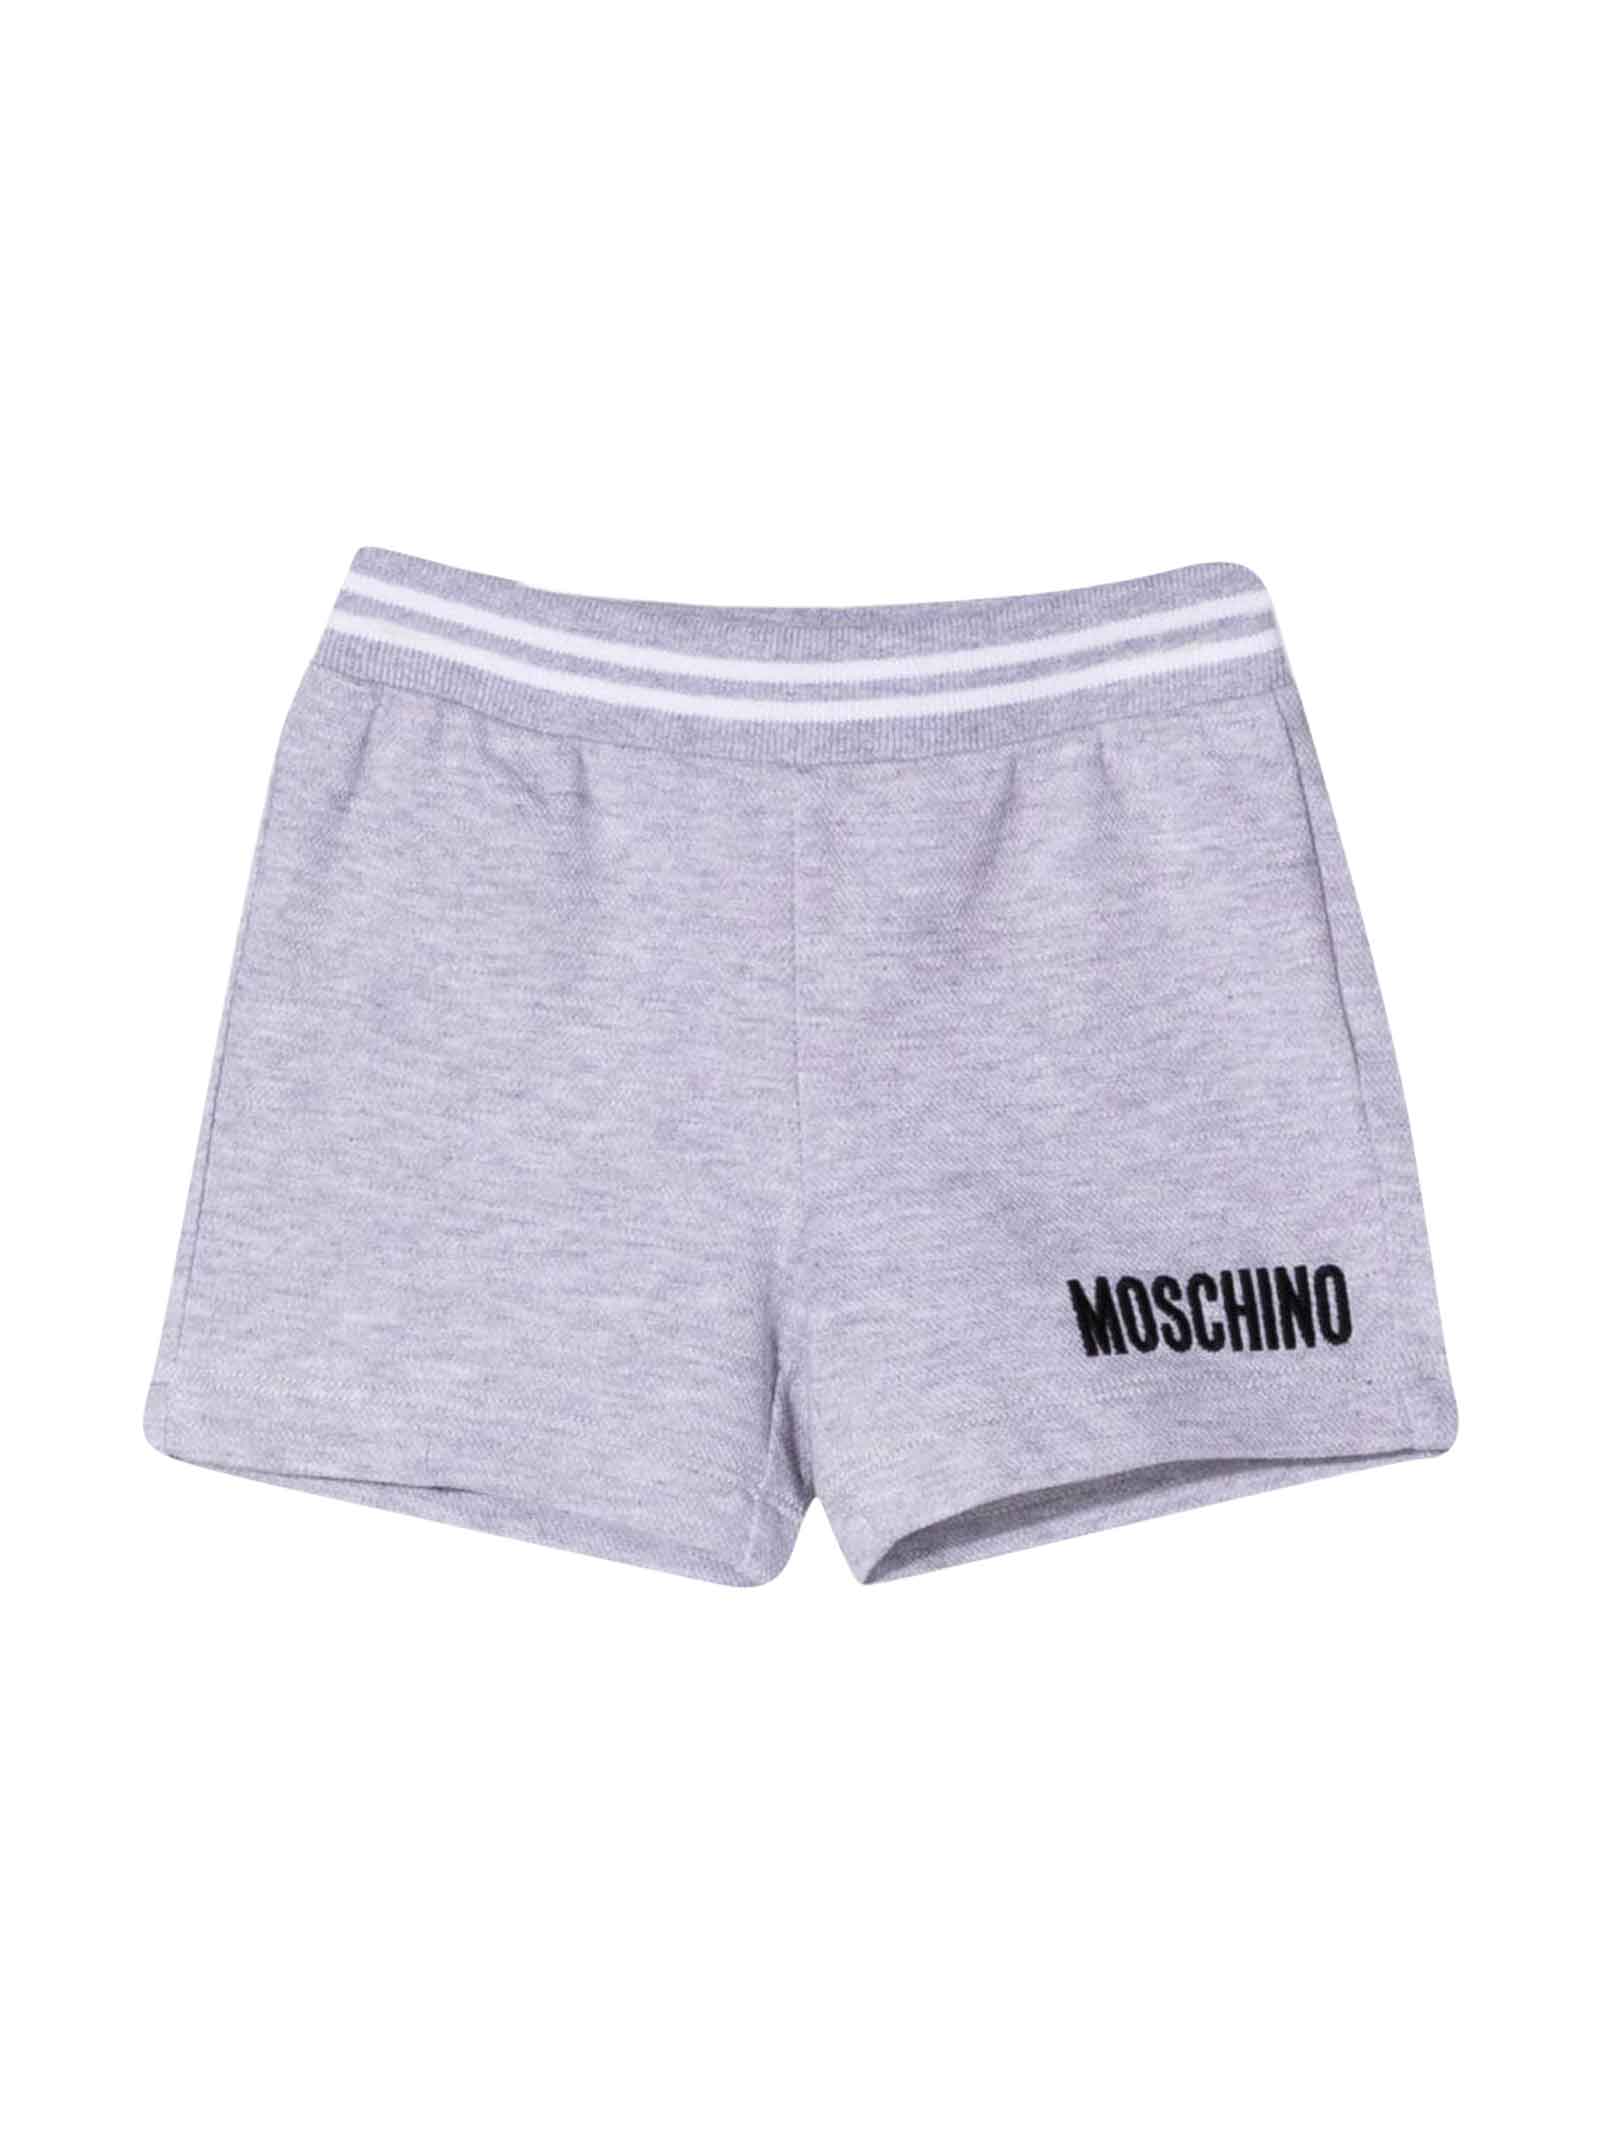 Moschino Unisex Gray Shorts